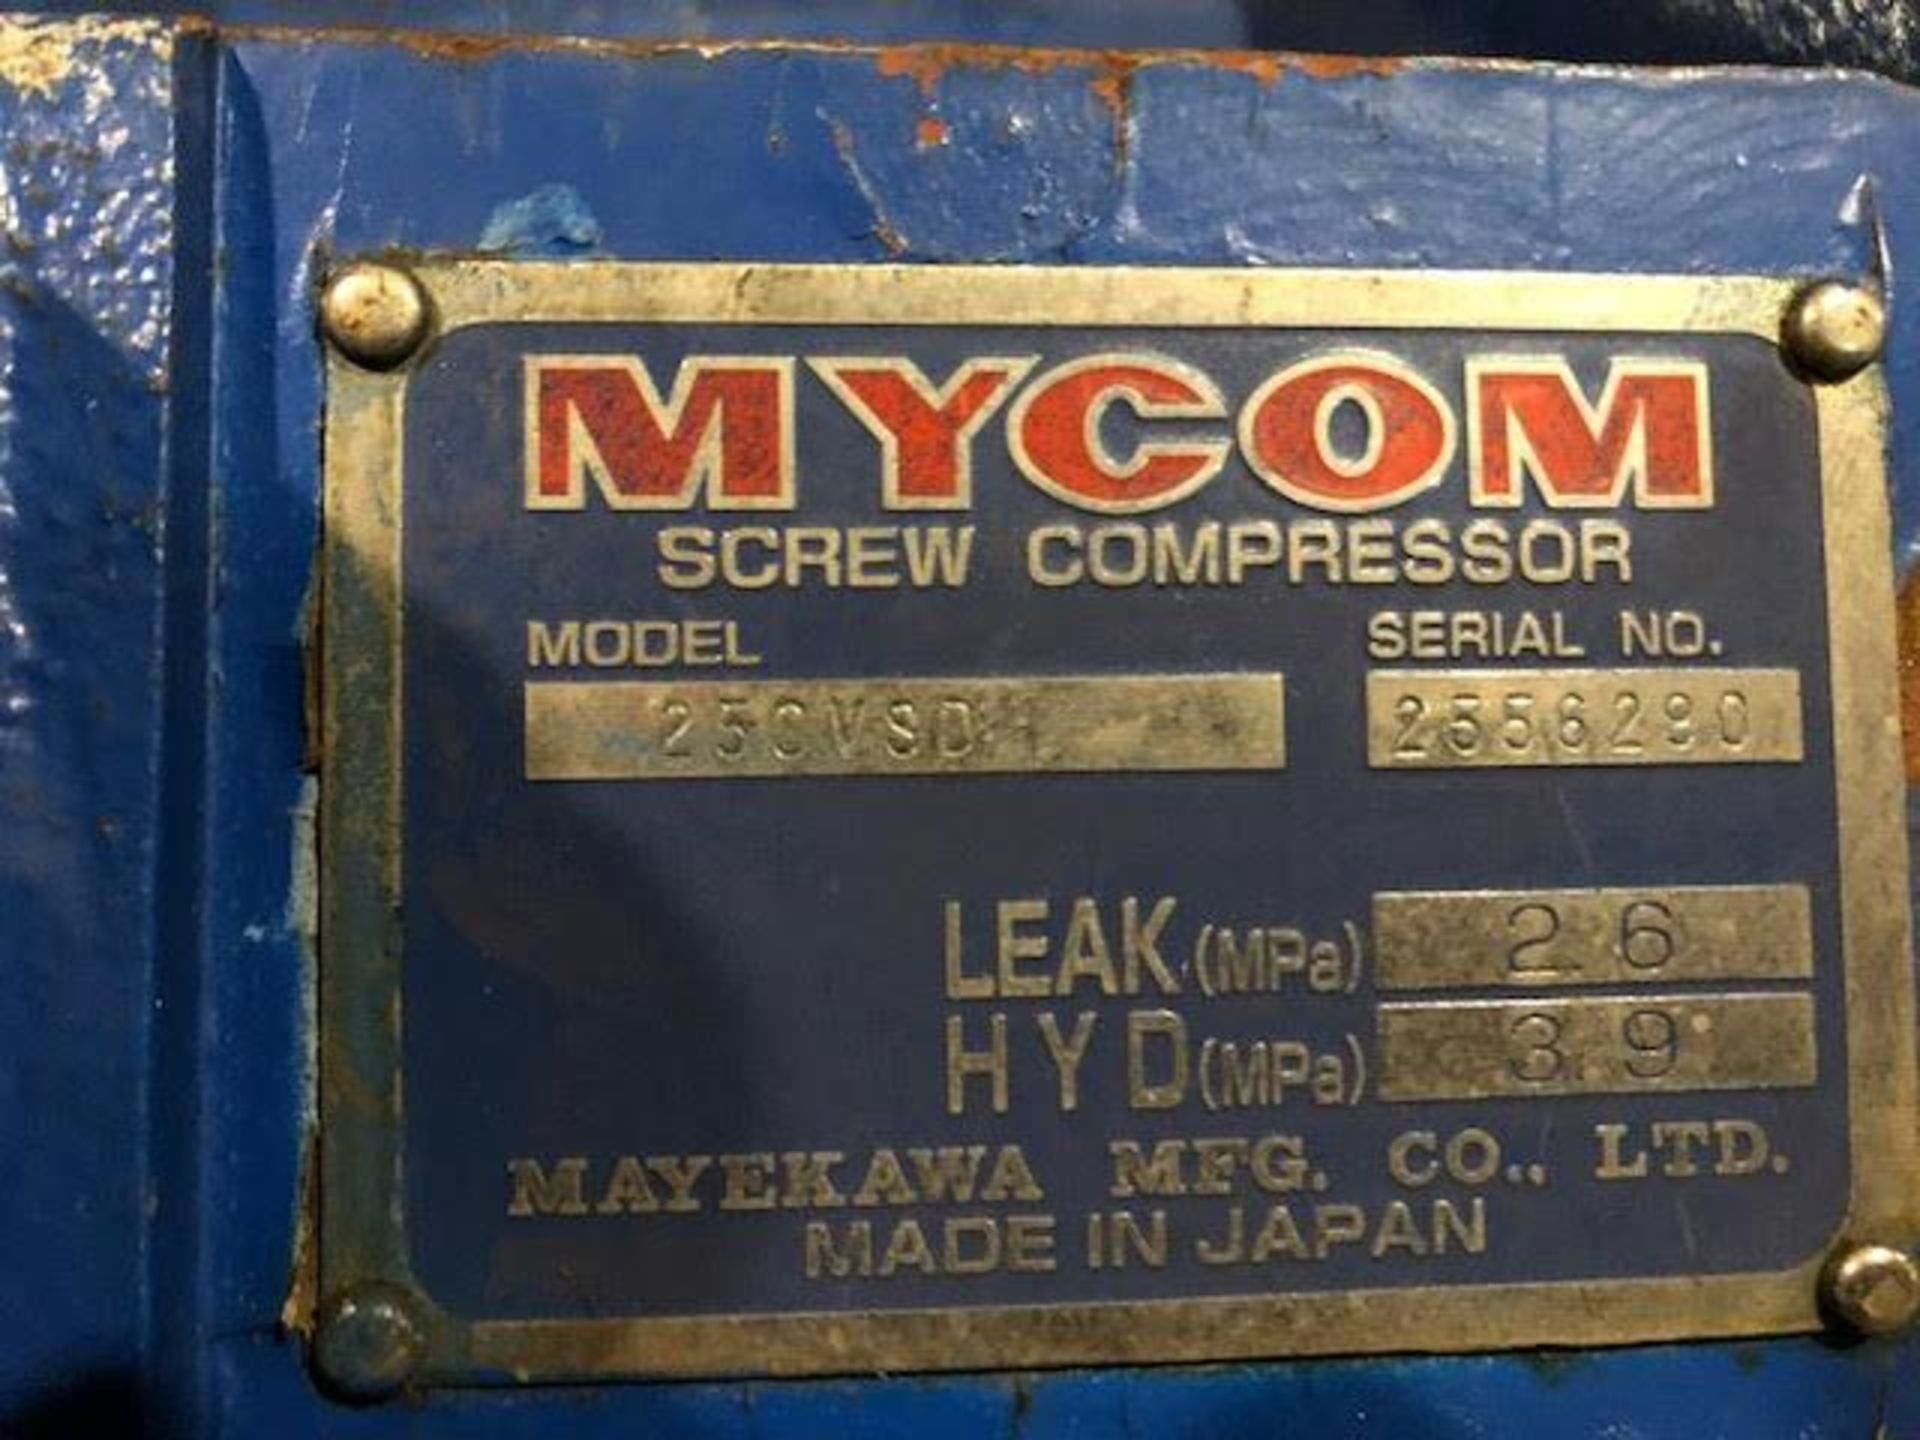 Mycom Screw Compressor, Model# 250VSD, 350 HP, Serial# 2556290, Item# ffmycscom6290, Located in: - Image 5 of 6